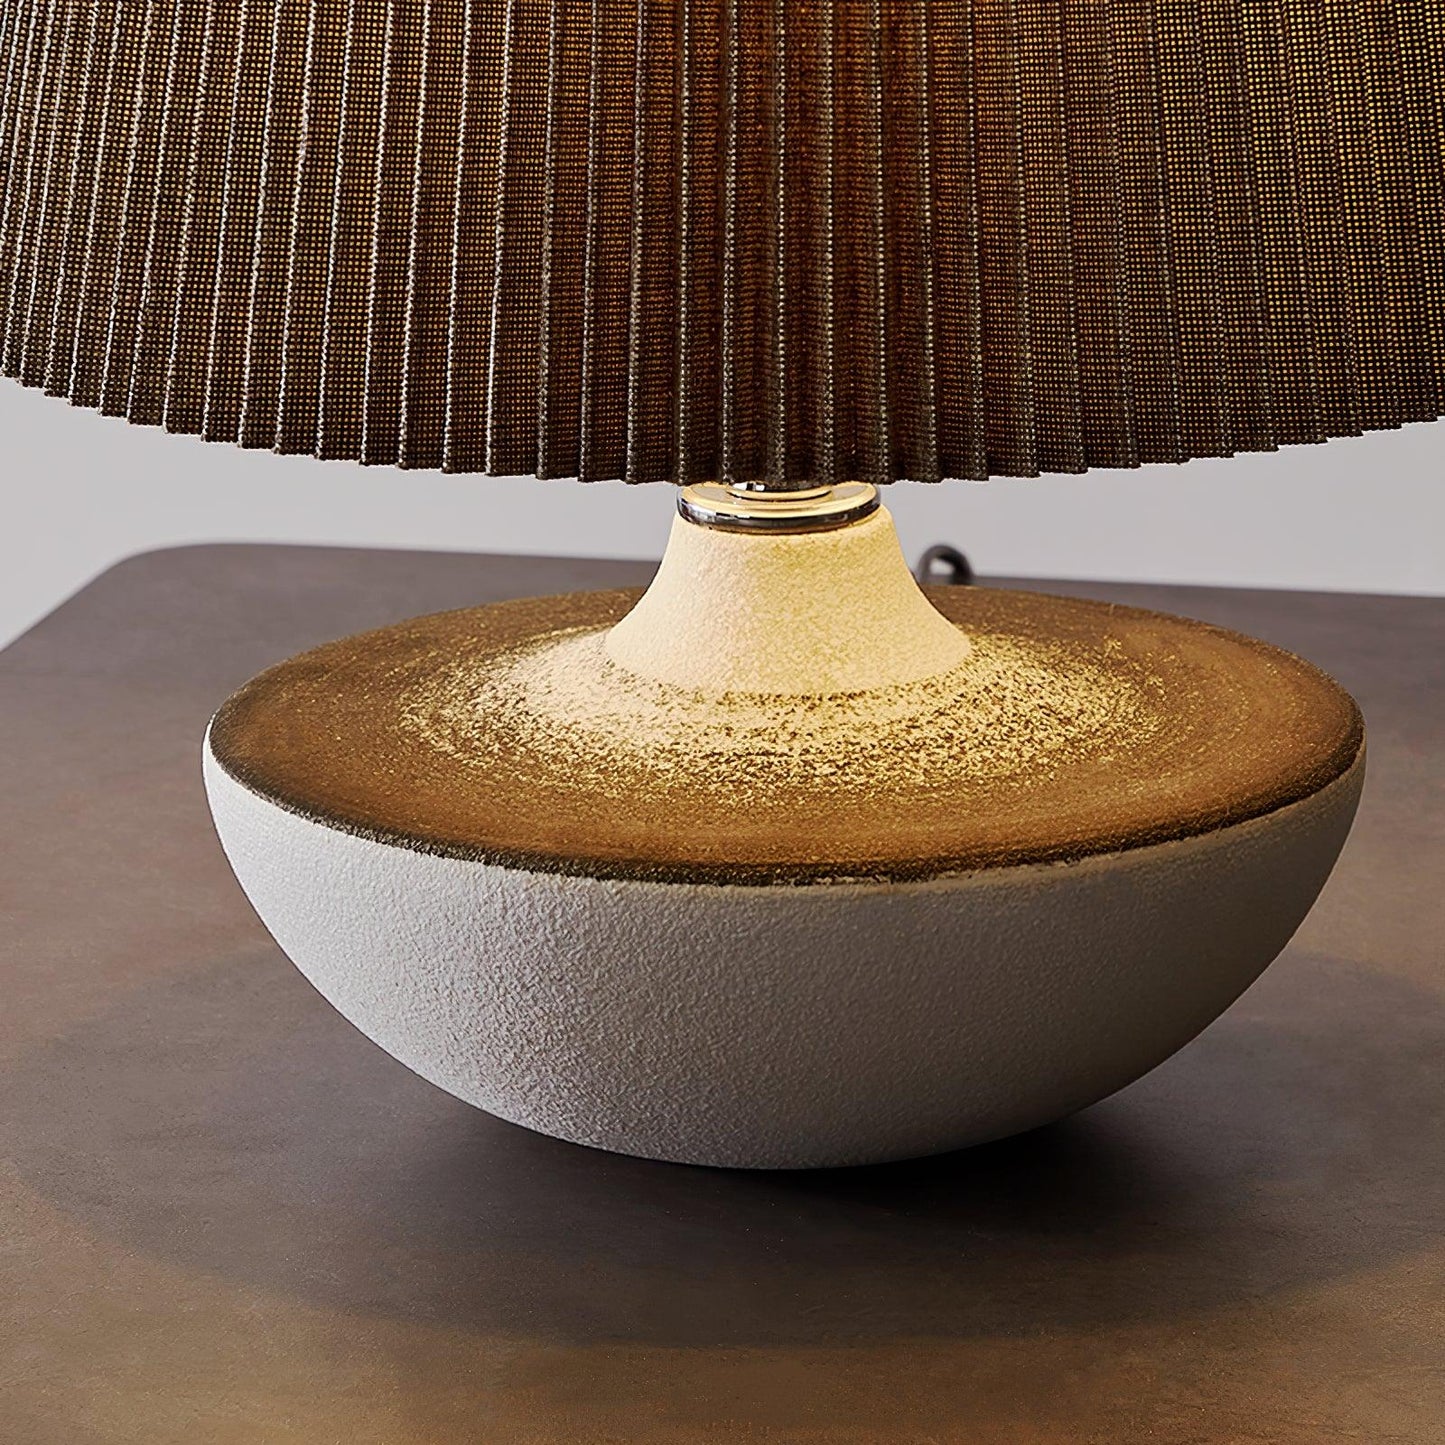 Ghassan Table Lamp